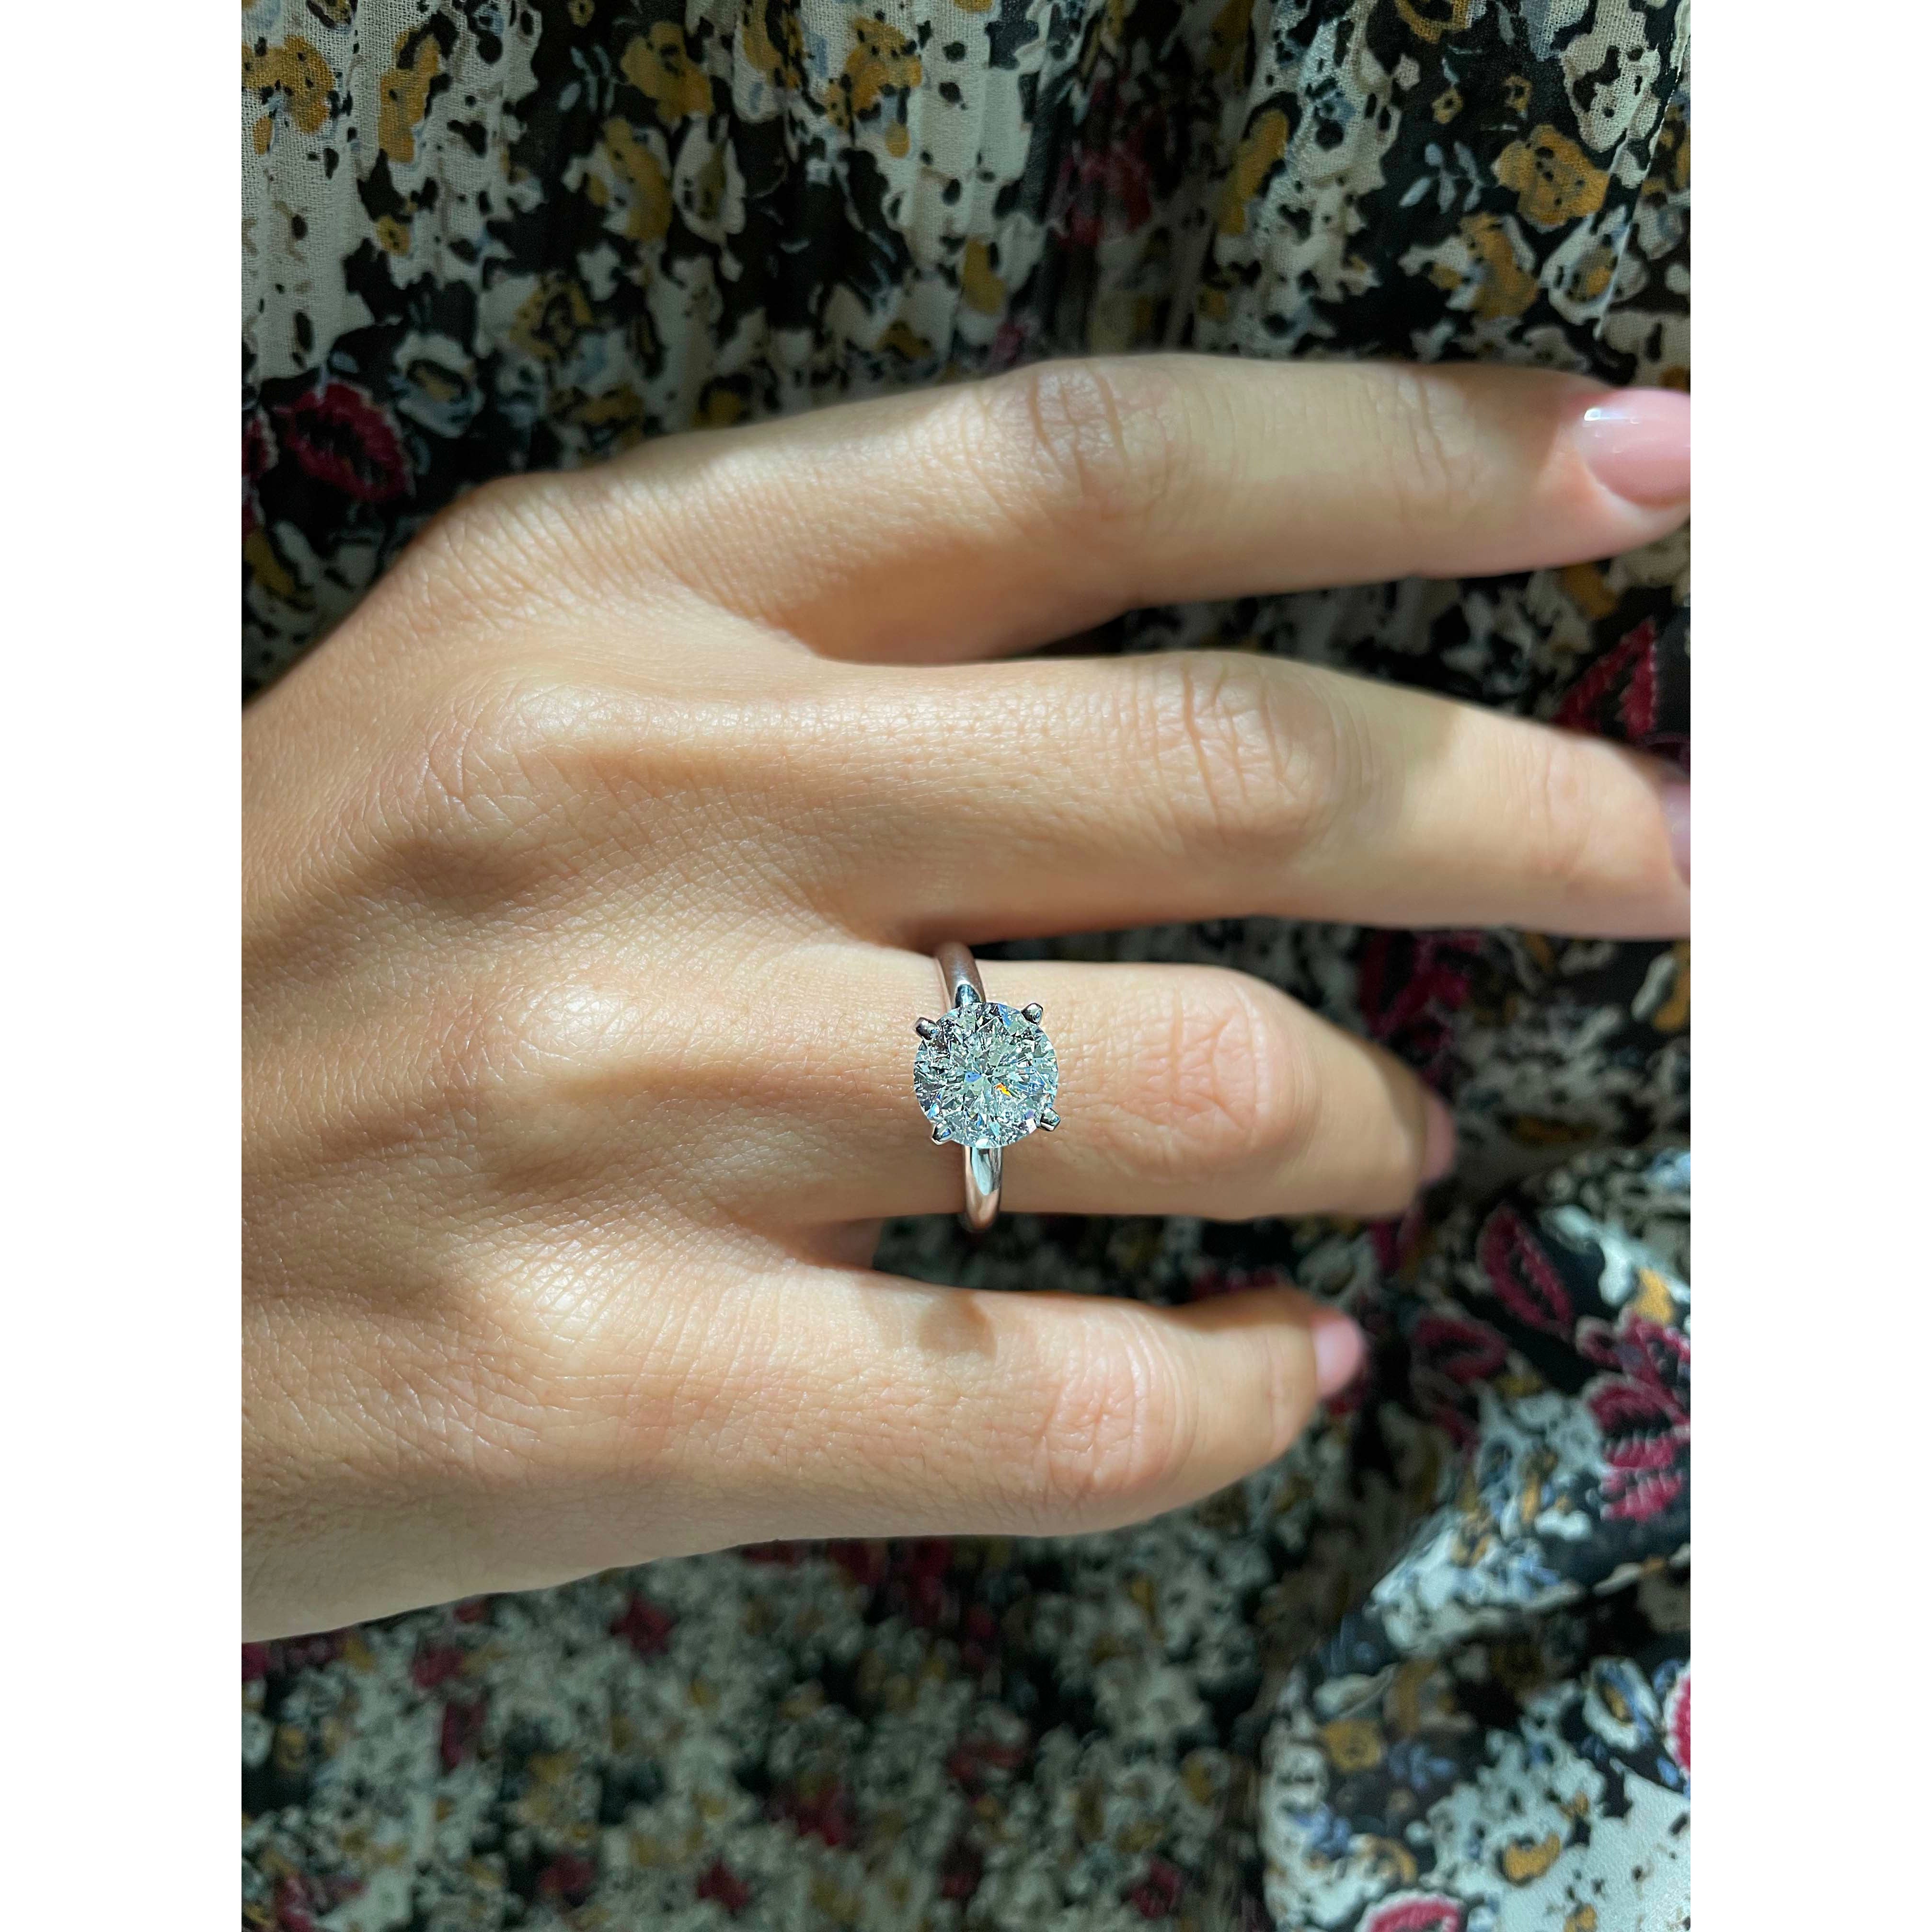 Jessica Lab Grown Diamond Ring   (2 Carat) -14K White Gold